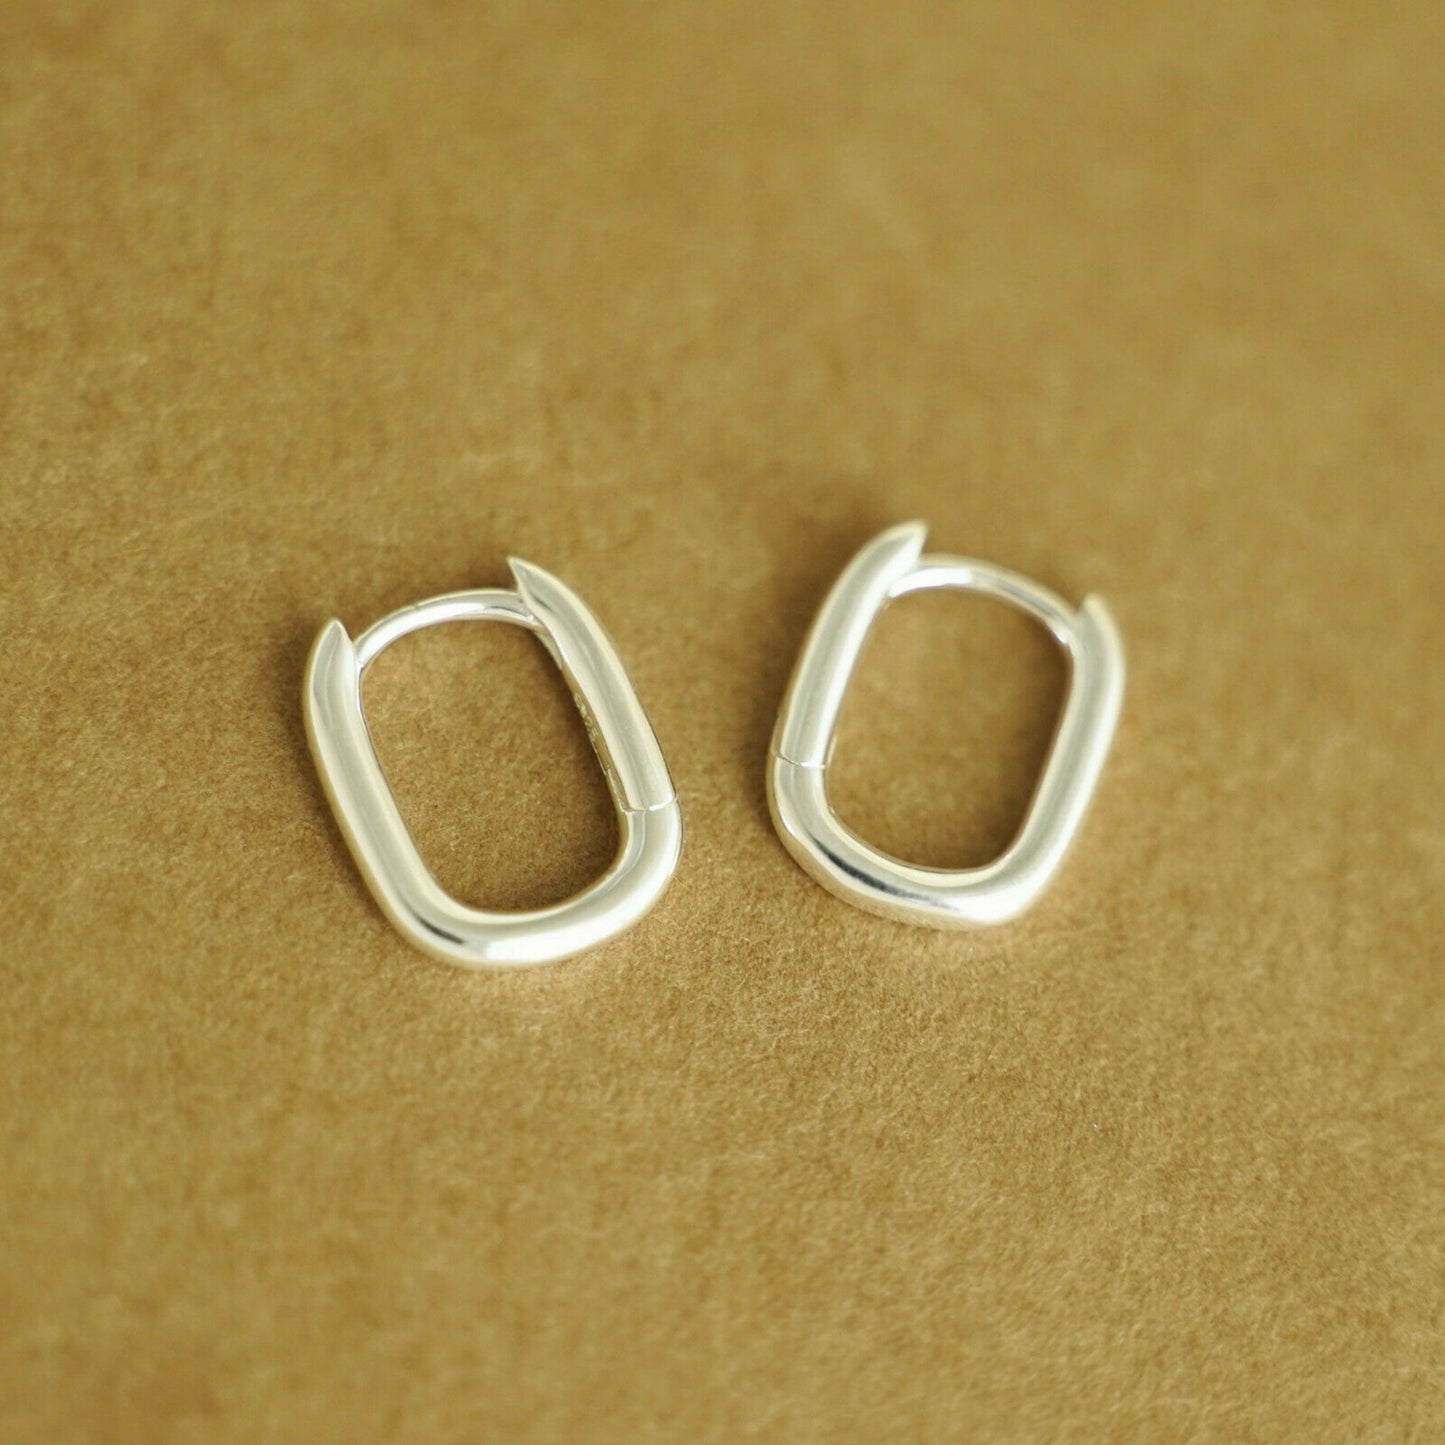 Sterling Silver Oval Square Hoop Earrings with Huggie Closure - sugarkittenlondon